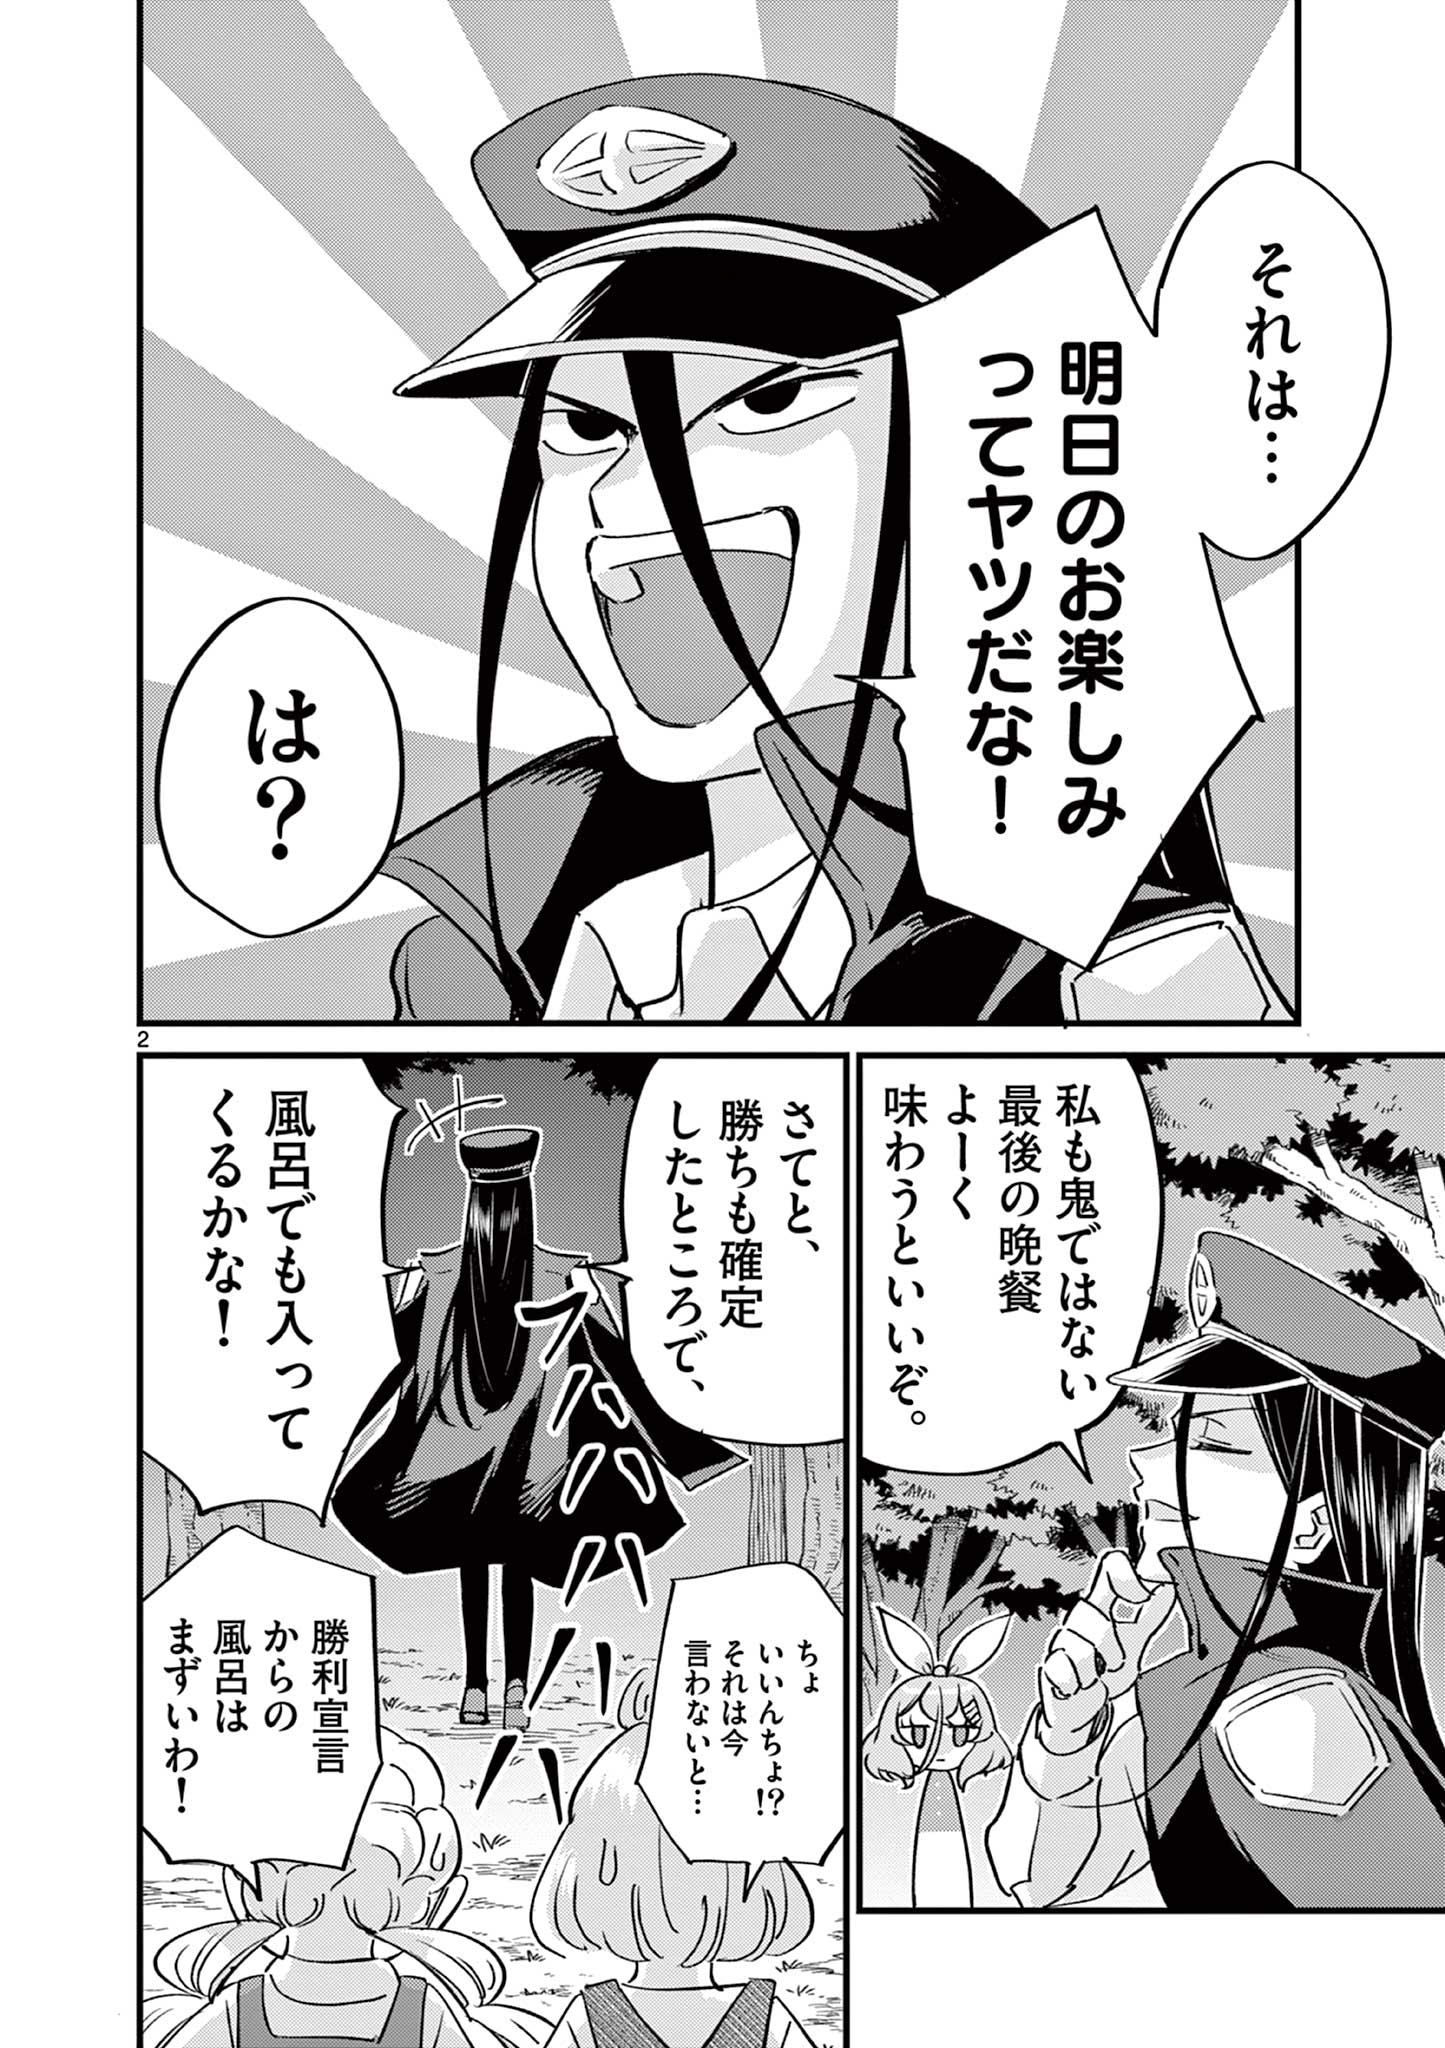 Ranka-chan wa Bitch ni Naritai - Chapter 19 - Page 2